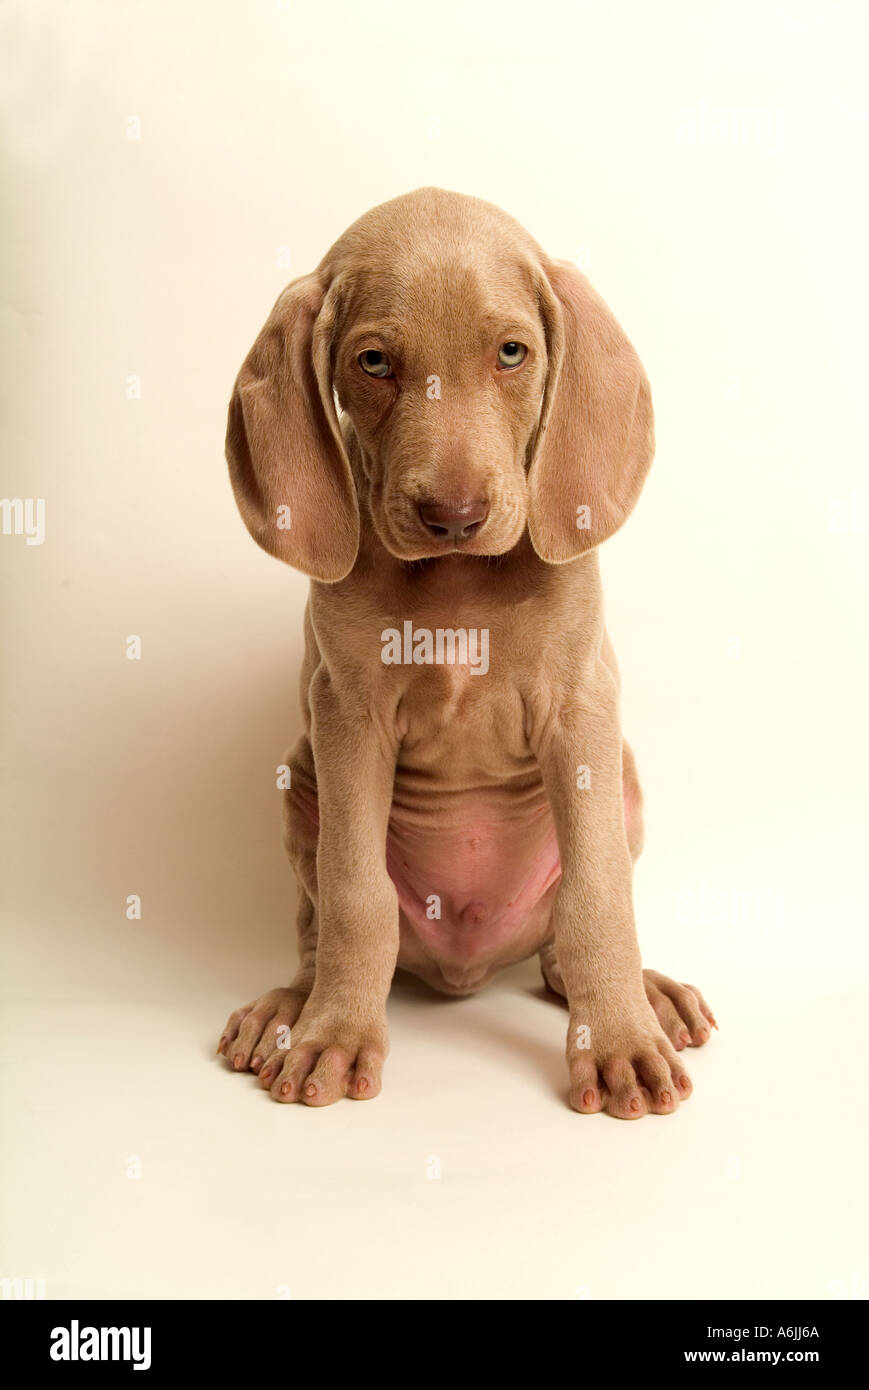 Sad looking six week old Weimaraner puppy Stock Photo - Alamy